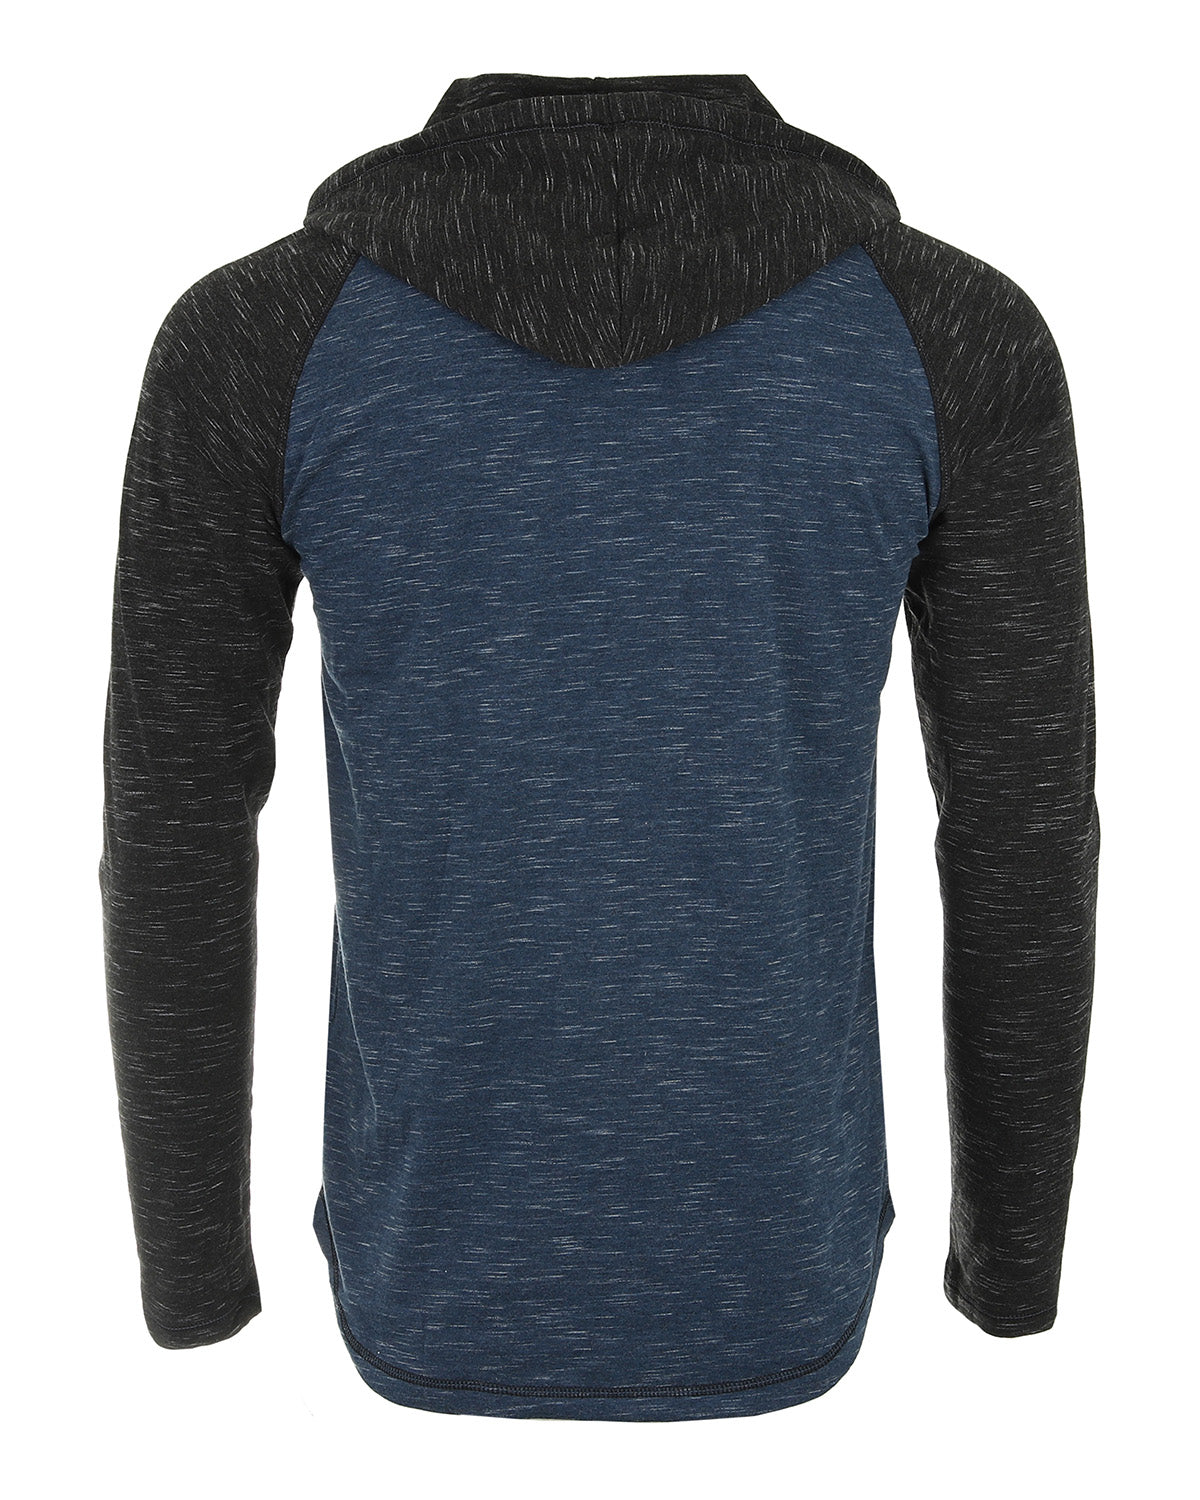 Men's Hoodie Pullover Sweatshirt – Long Sleeve Athletic Casual Active Hip Hop Button Raglan Henley Shirt Hooded Top